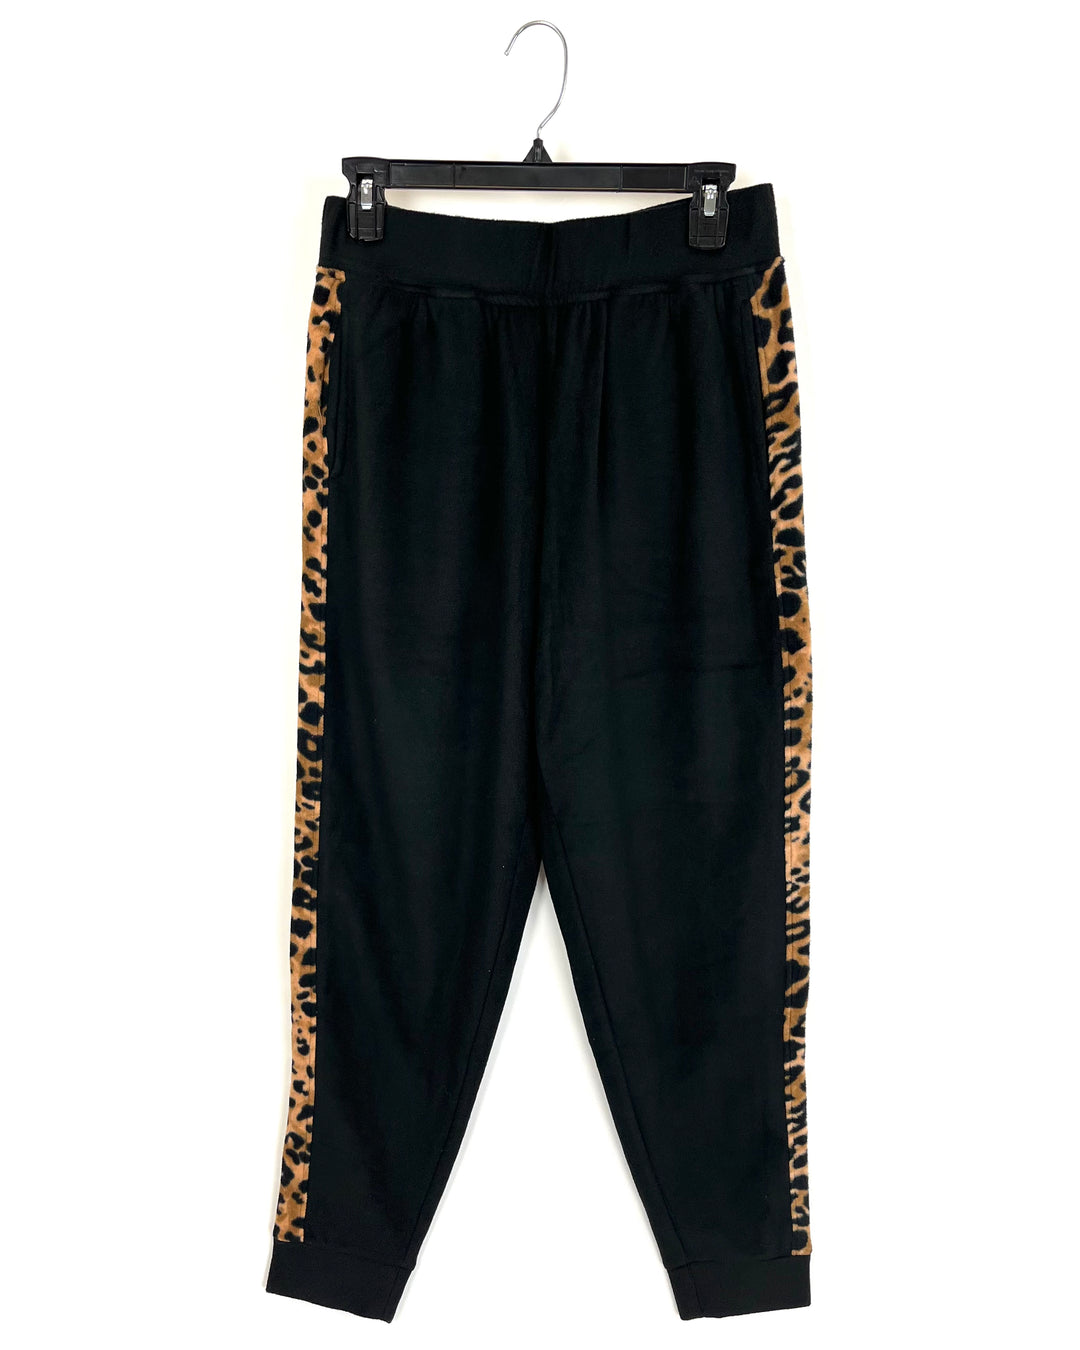 Black and Leopard Fleece Jogger Pants - Size 2/4